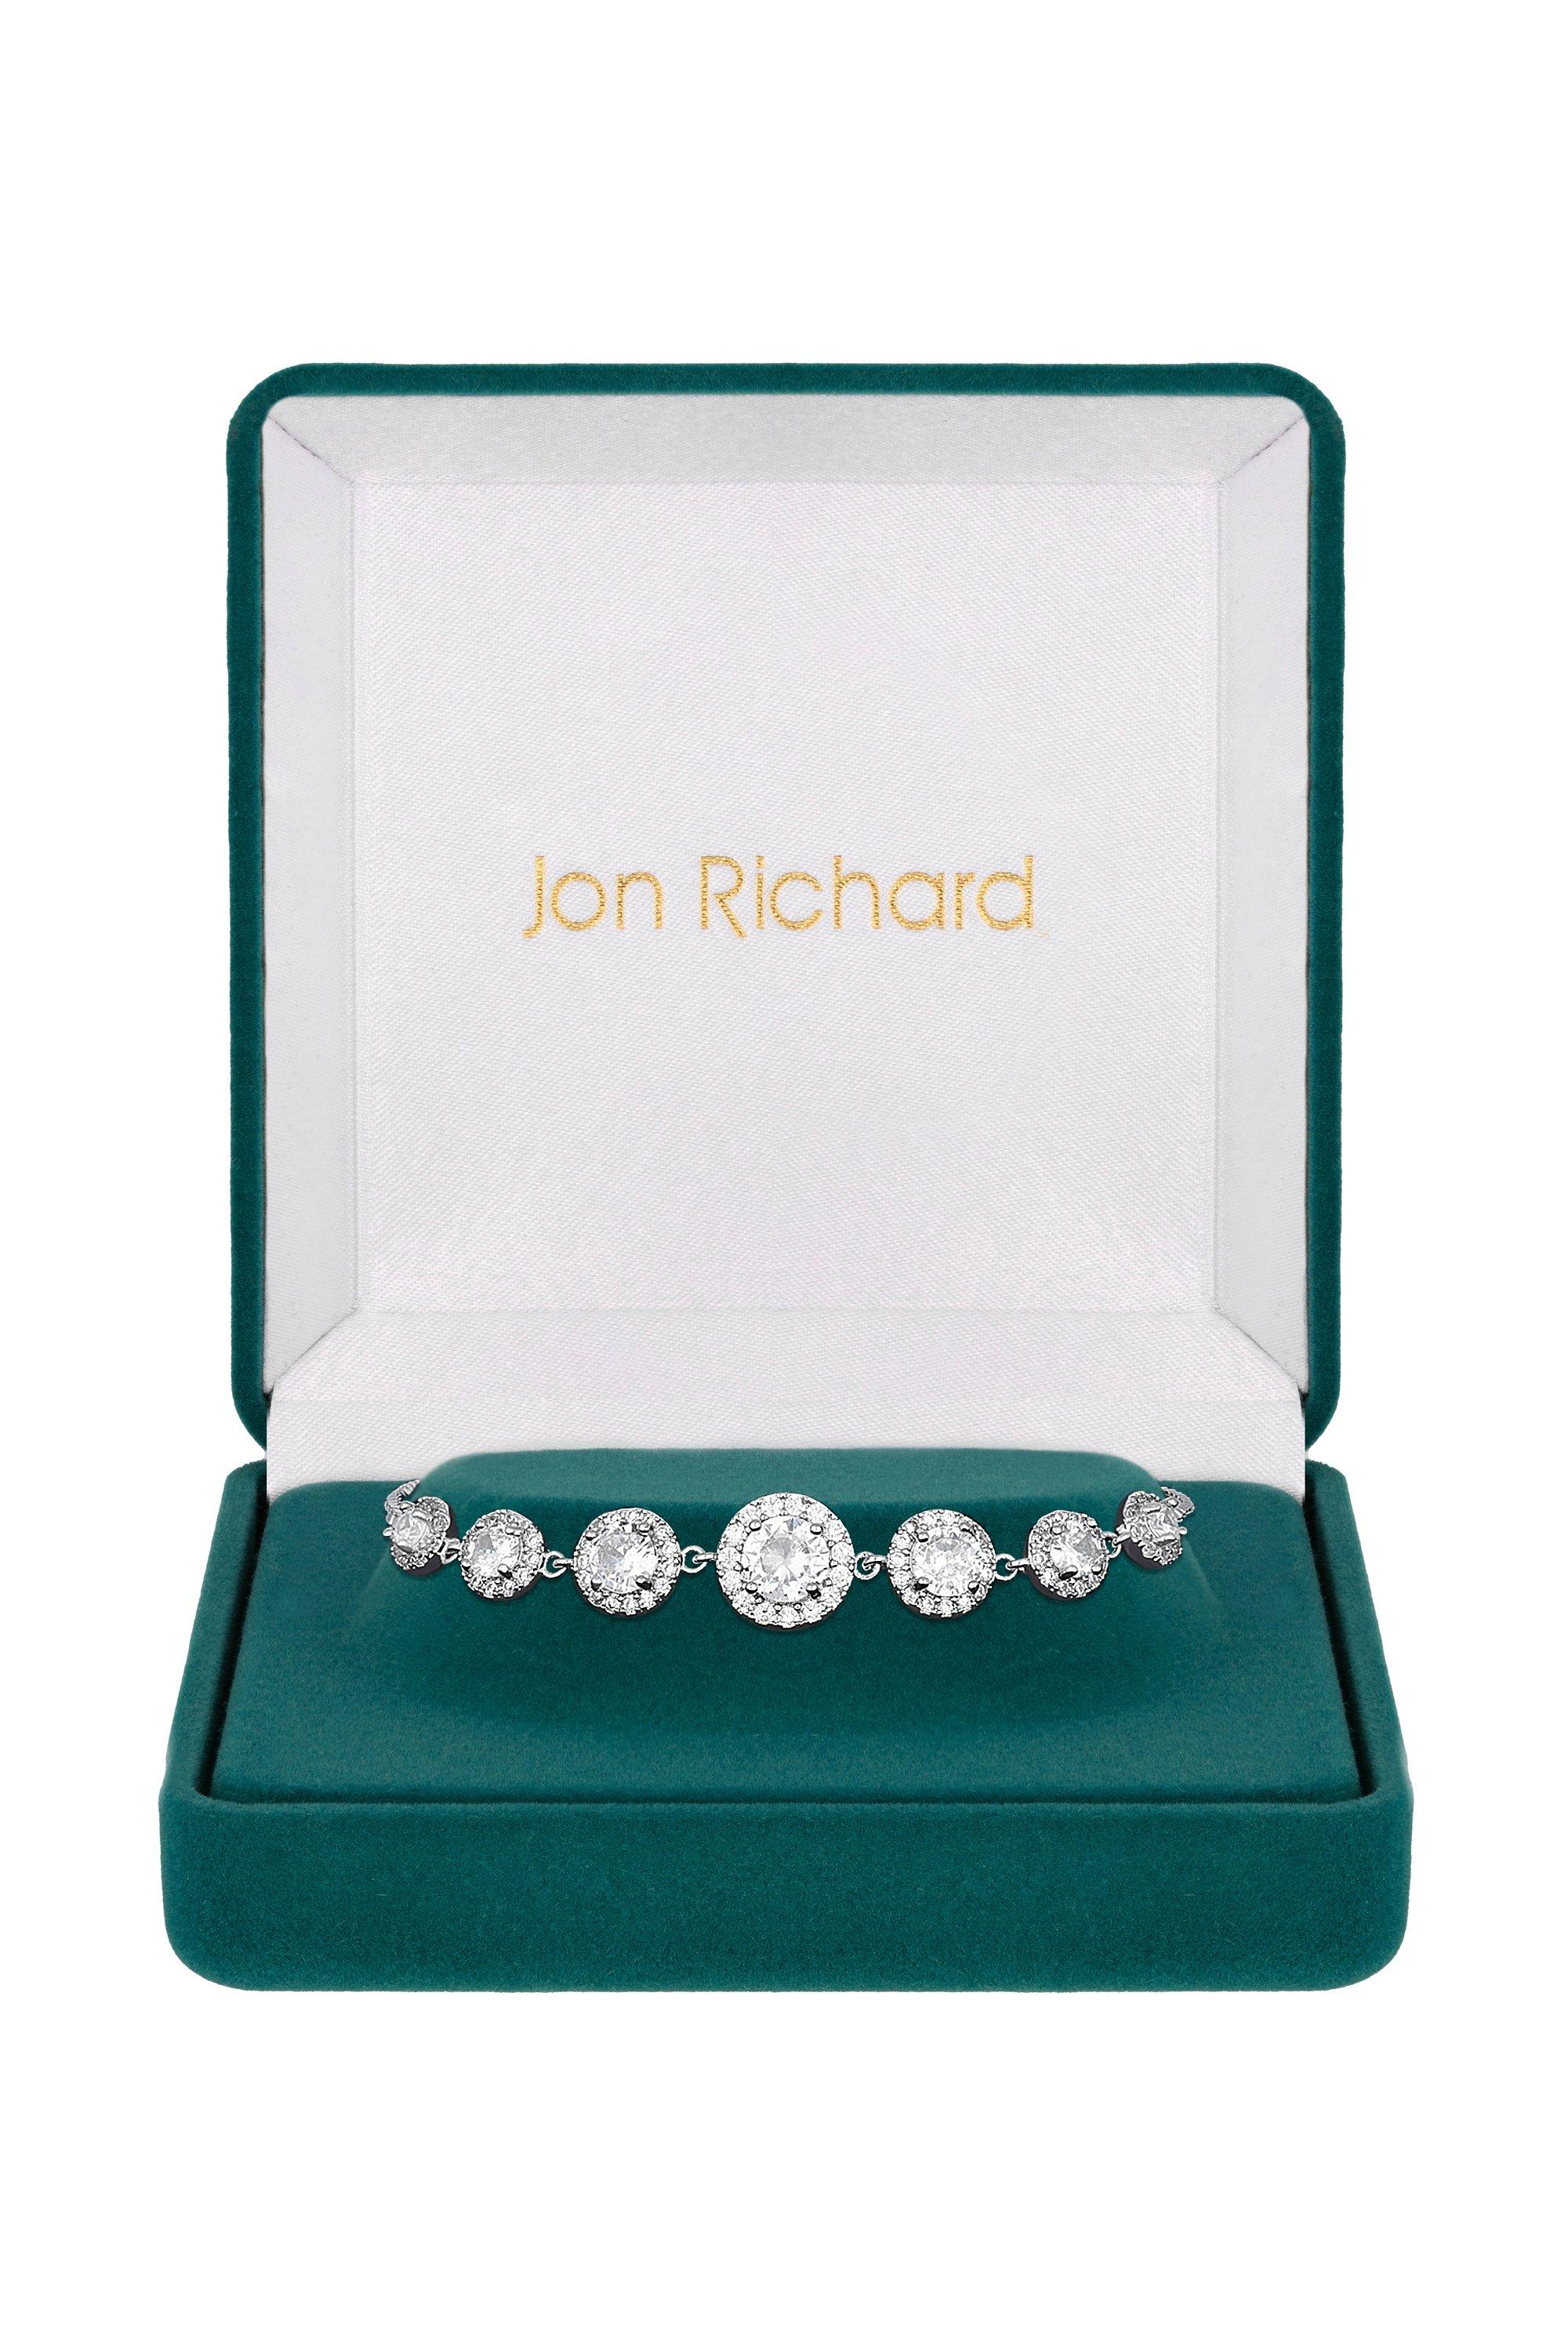 Jon Richard Rose Gold Plated Center Stone Tennis Toggle Bracelet -  Jewellery from Jon Richard UK